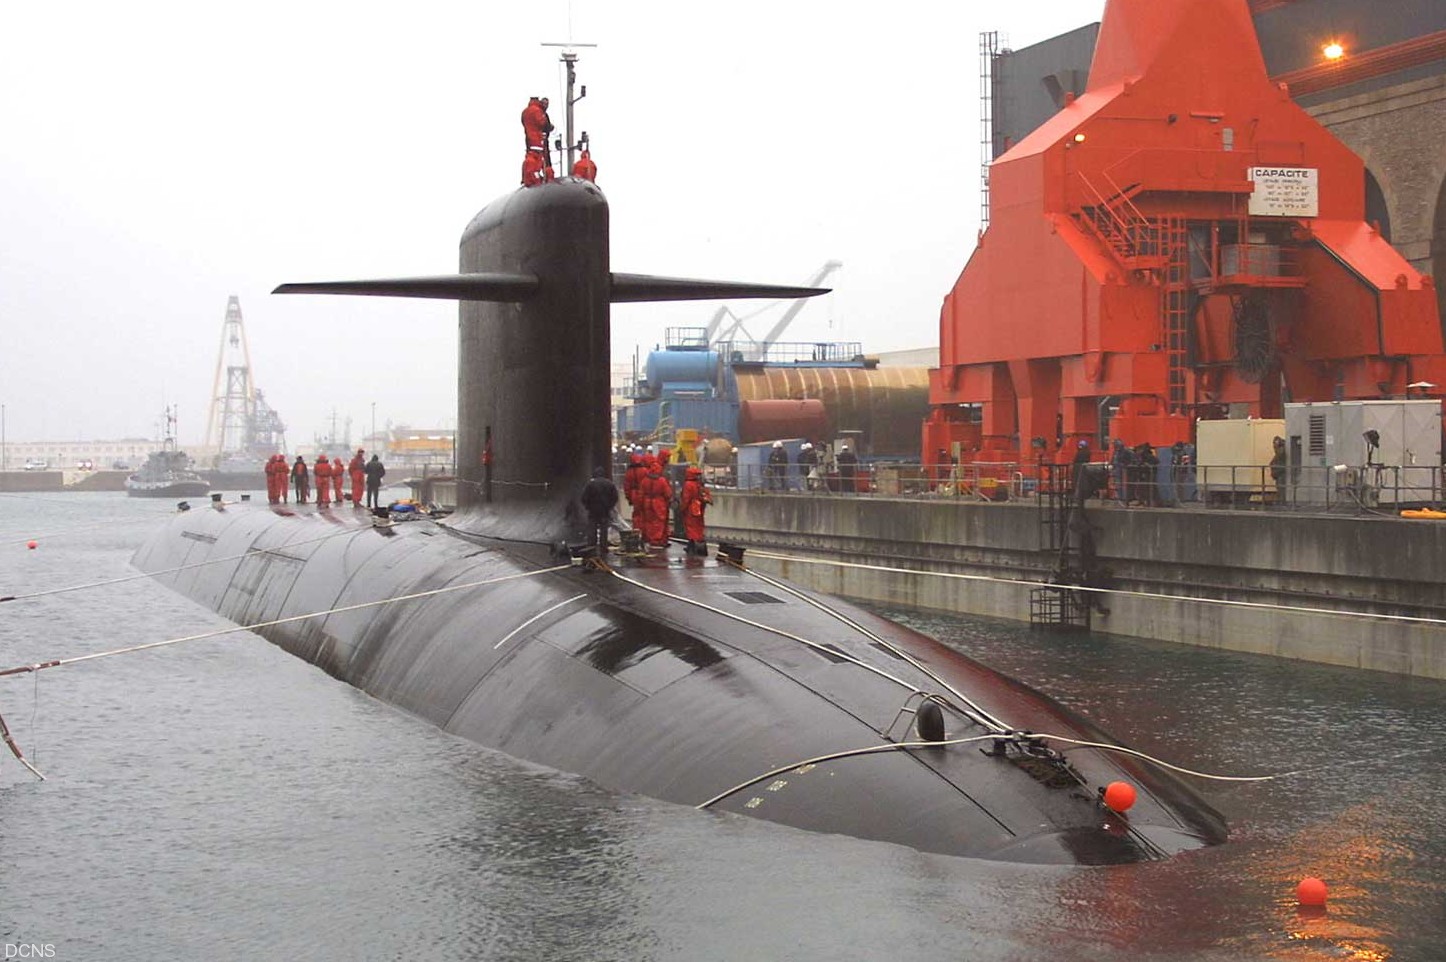 le triomphant class ballistic missile submarine ssbn snle french navy marine nationale temeraire vigilant terrible 15